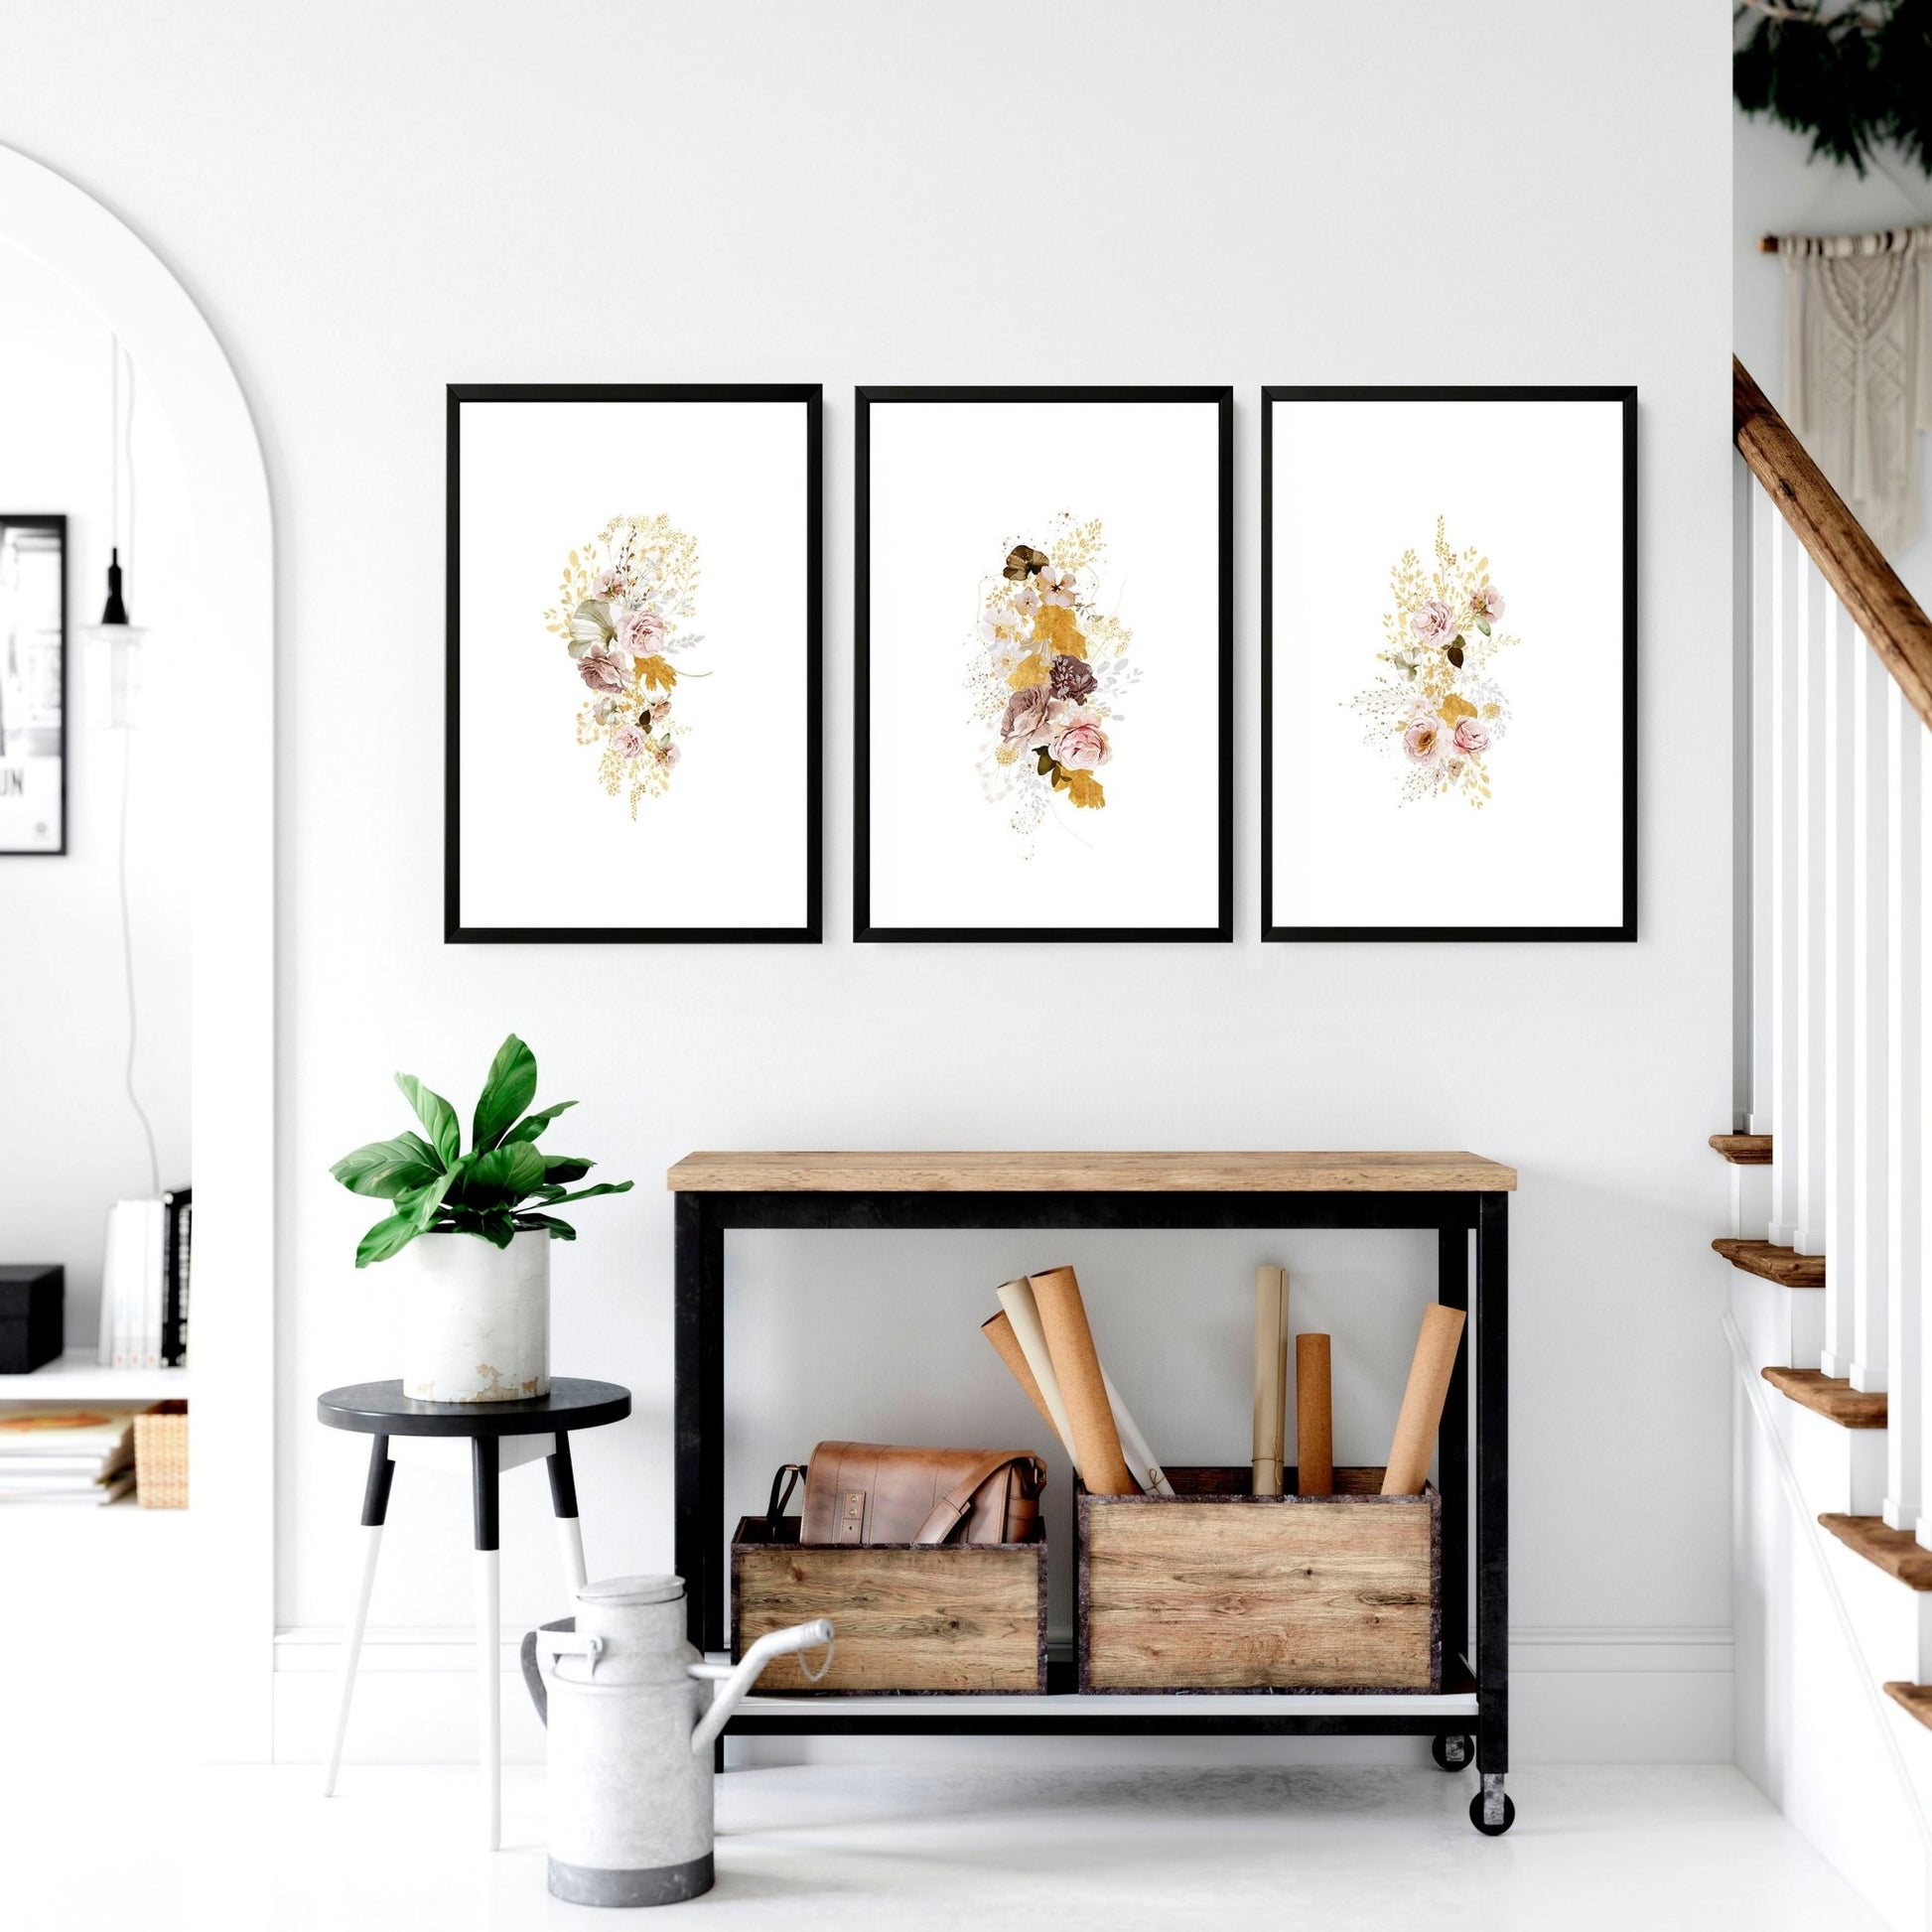 Botanical prints for kitchen wall | set of 3 wall art prints - About Wall Art